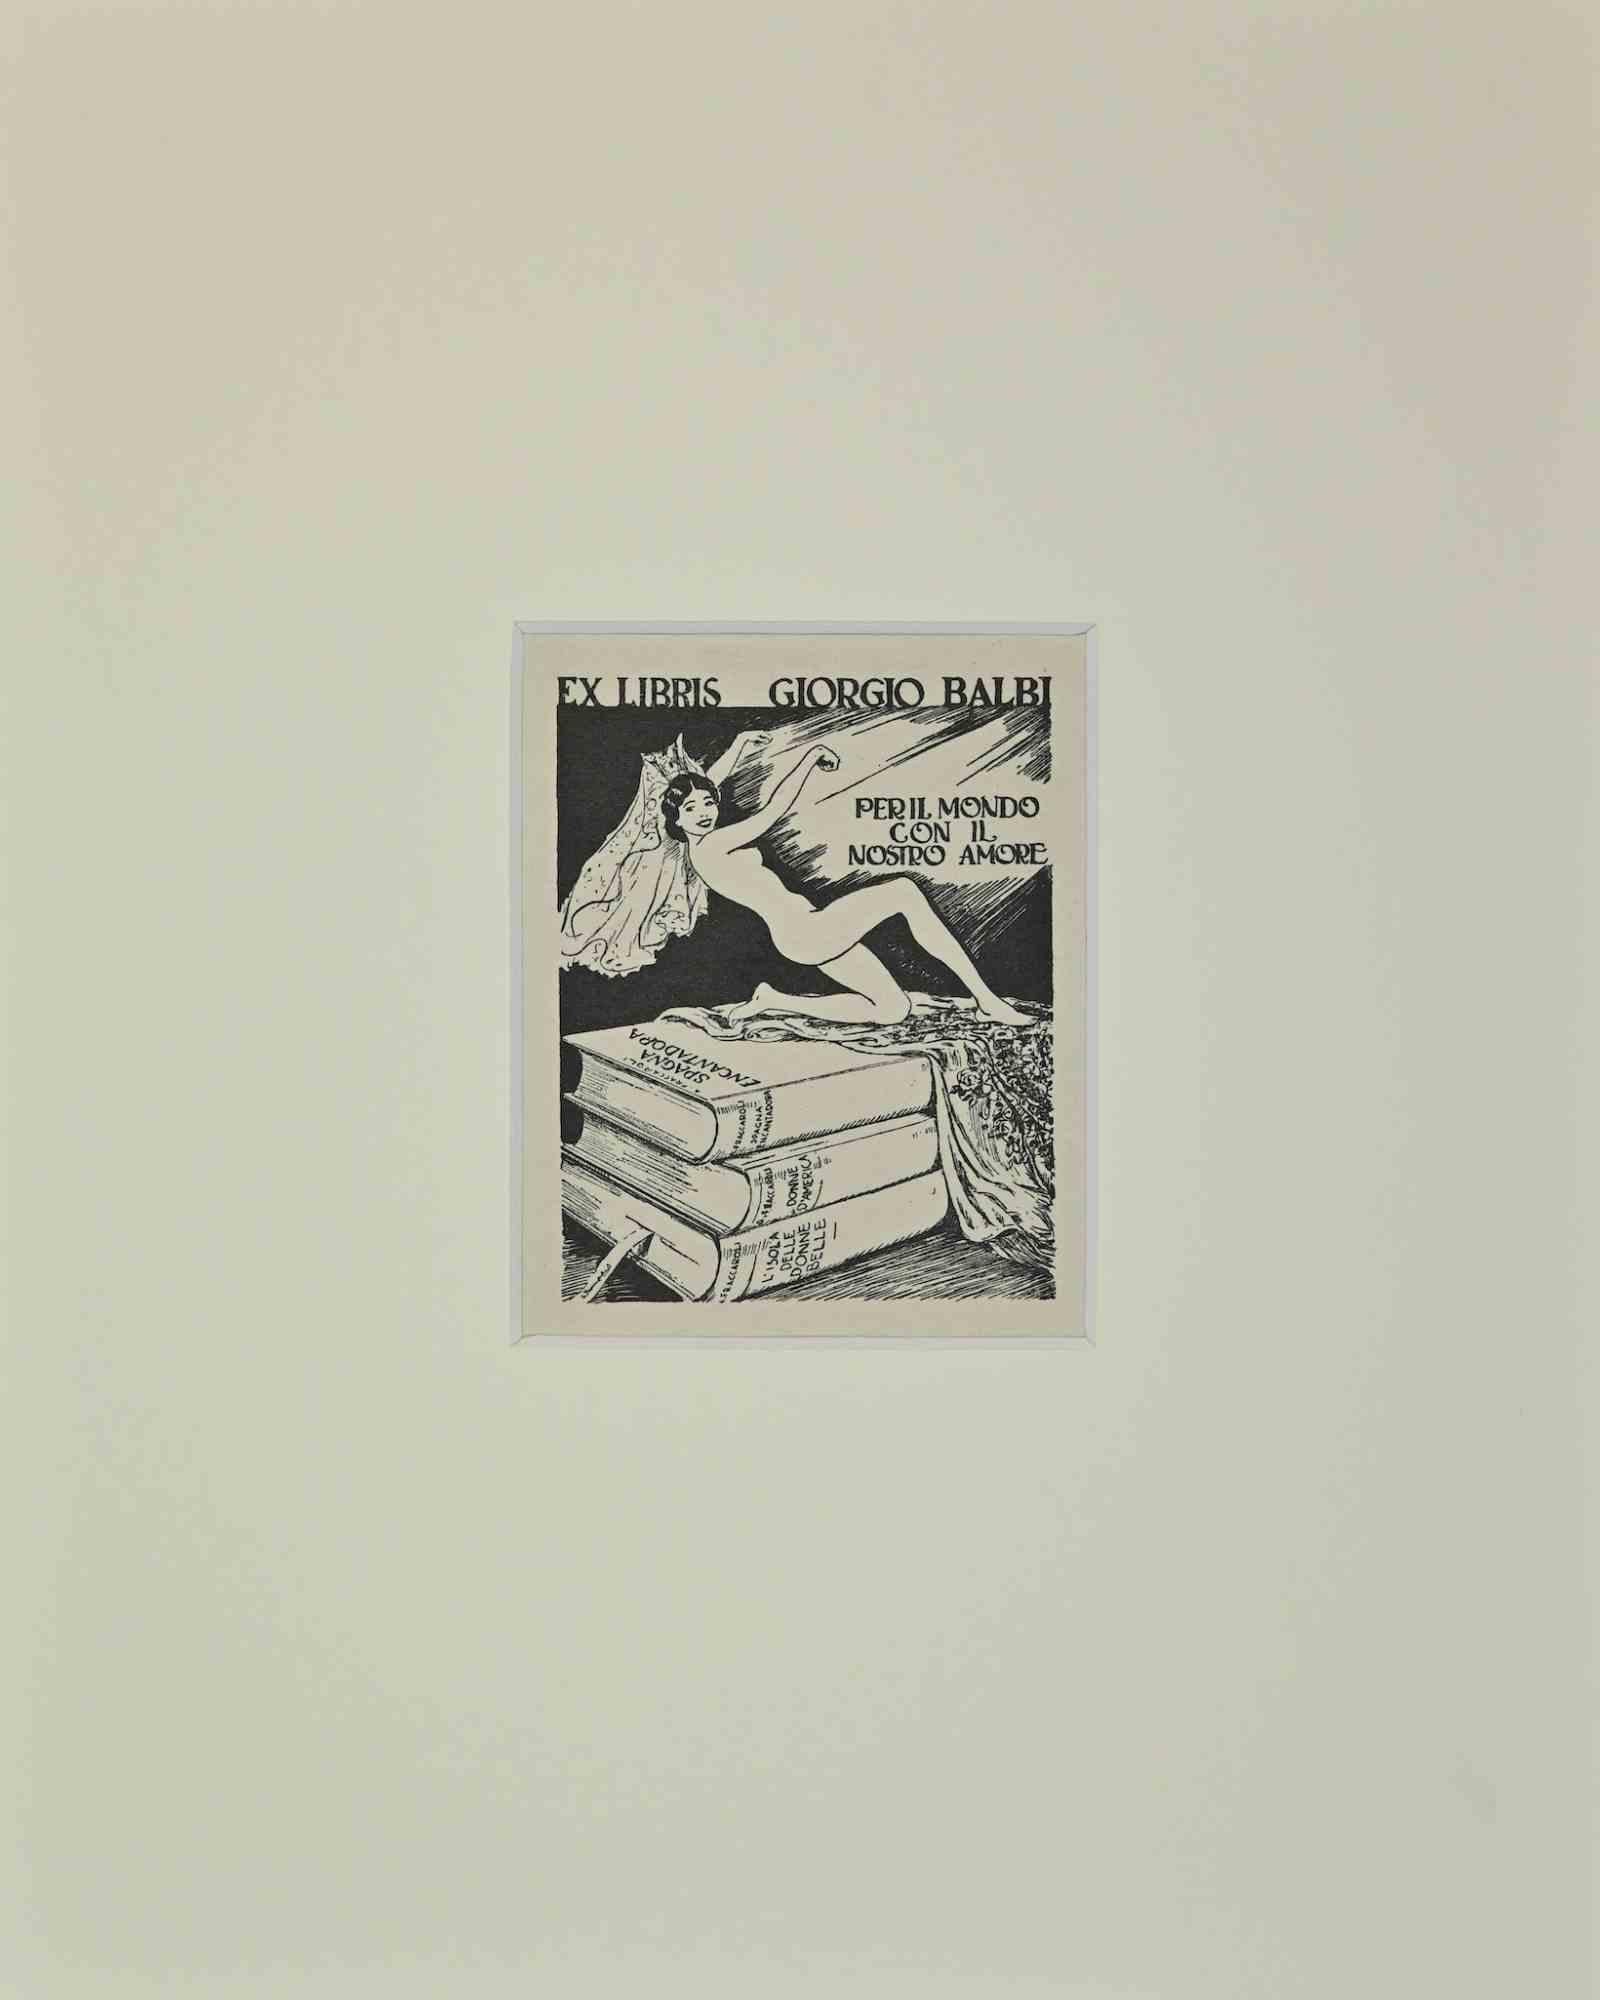 Figurative Print Unknown - Ex Libris  - Giorgio Balbi  - Per il Mondo - Gravure sur bois - Milieu du XXe siècle